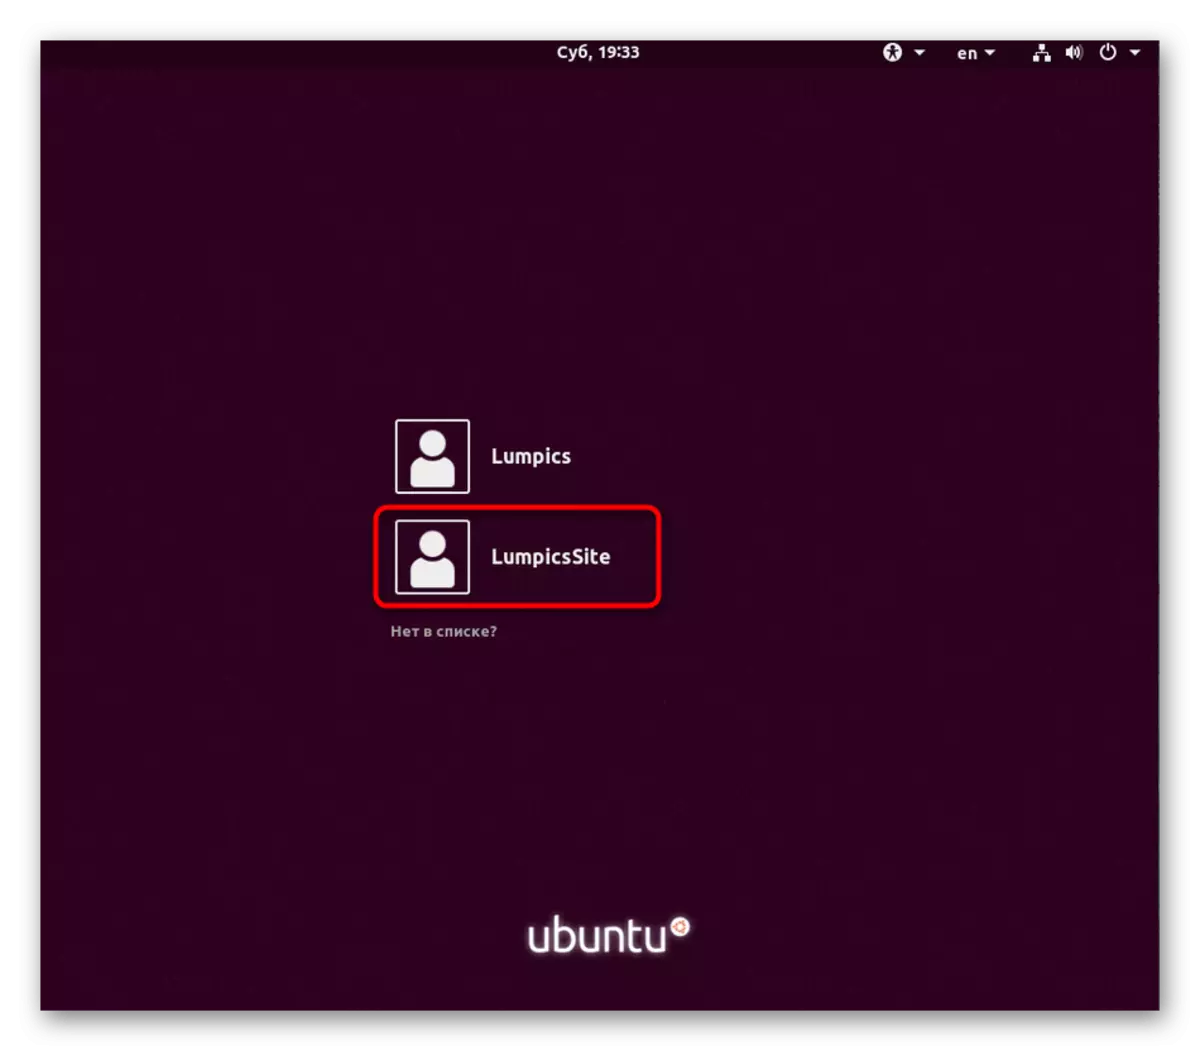 Ubuntuのパスワードをリセットするためのユーザーアカウントへの許可